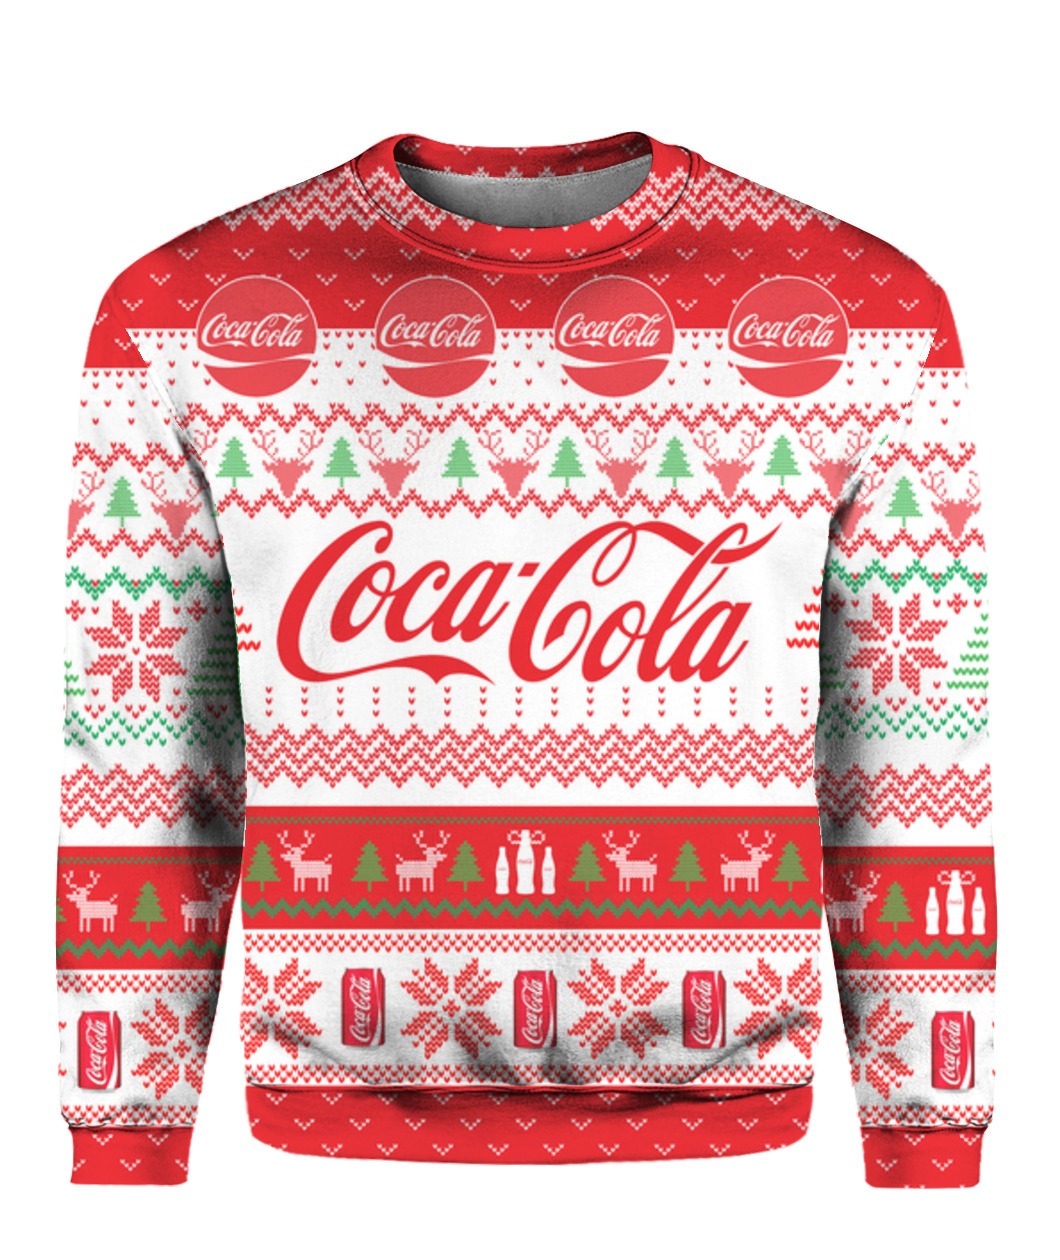 Coca cola full printing ugly christmas sweater 1